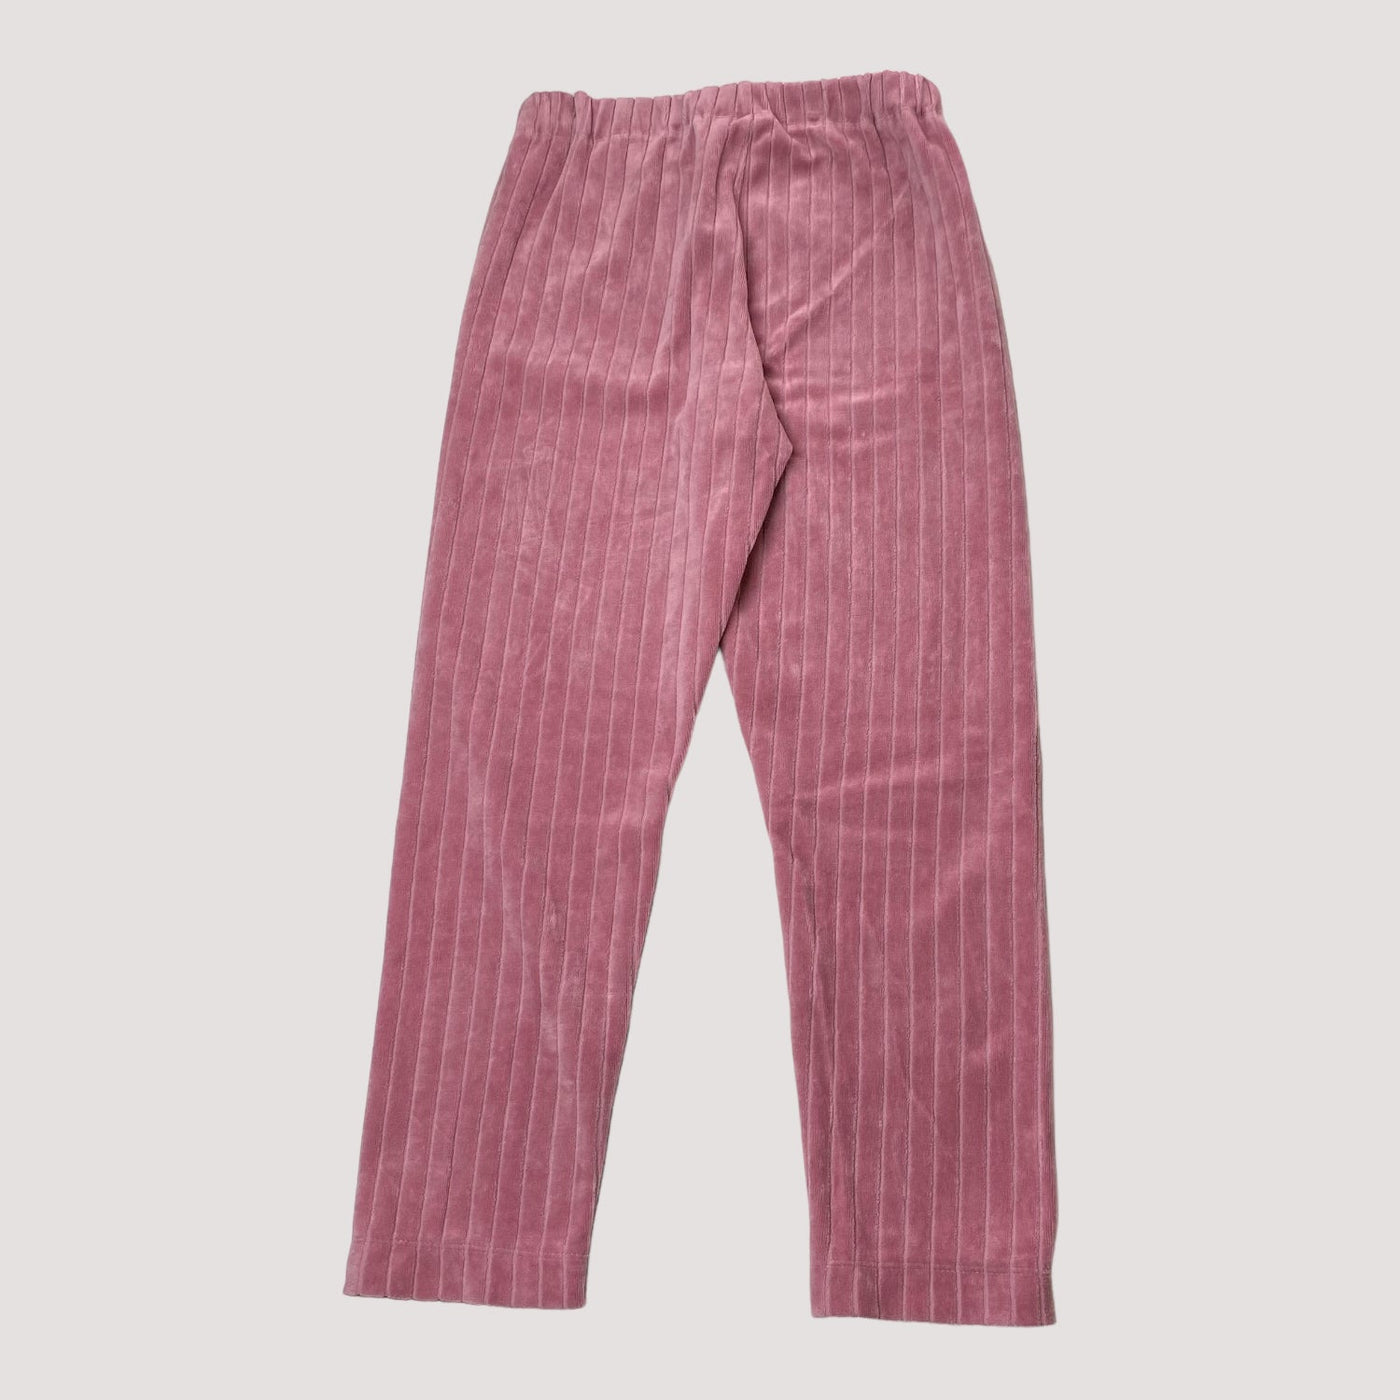 terry pants, pink | 134/140cm